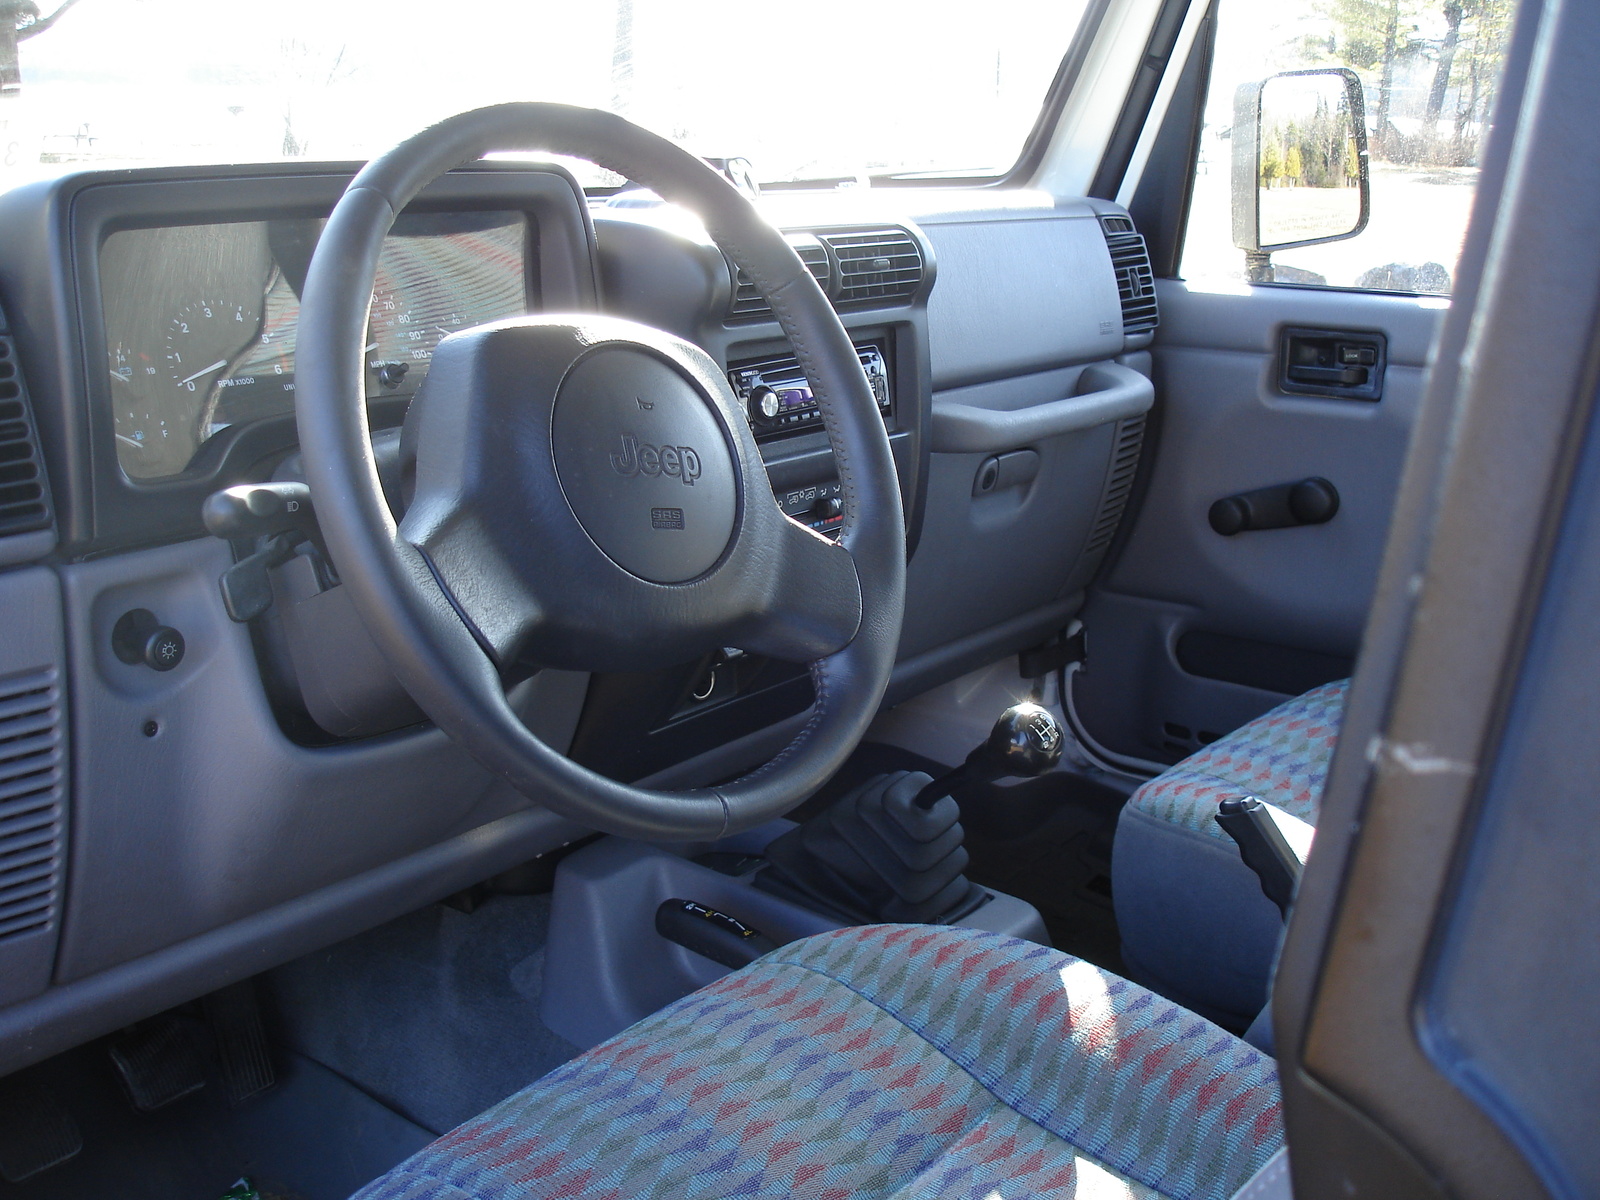 1997 Jeep wrangler interior pictures #4